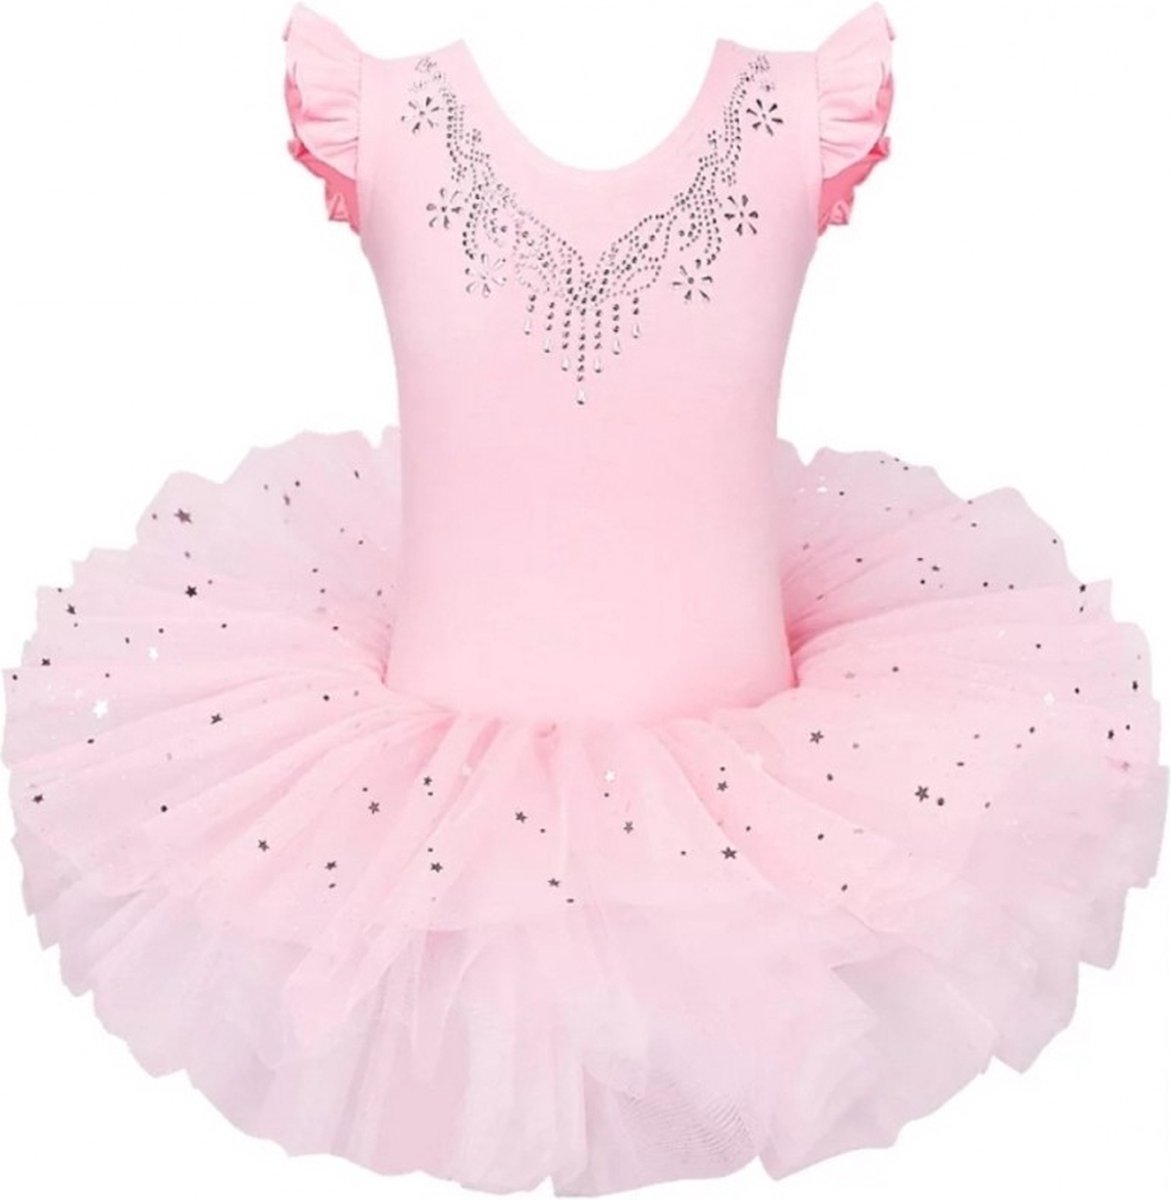 Balletpakje met Tutu Peach roze Sparkle Style 98-104 - Ballet - prinsessen tutu verkleed jurk meisje